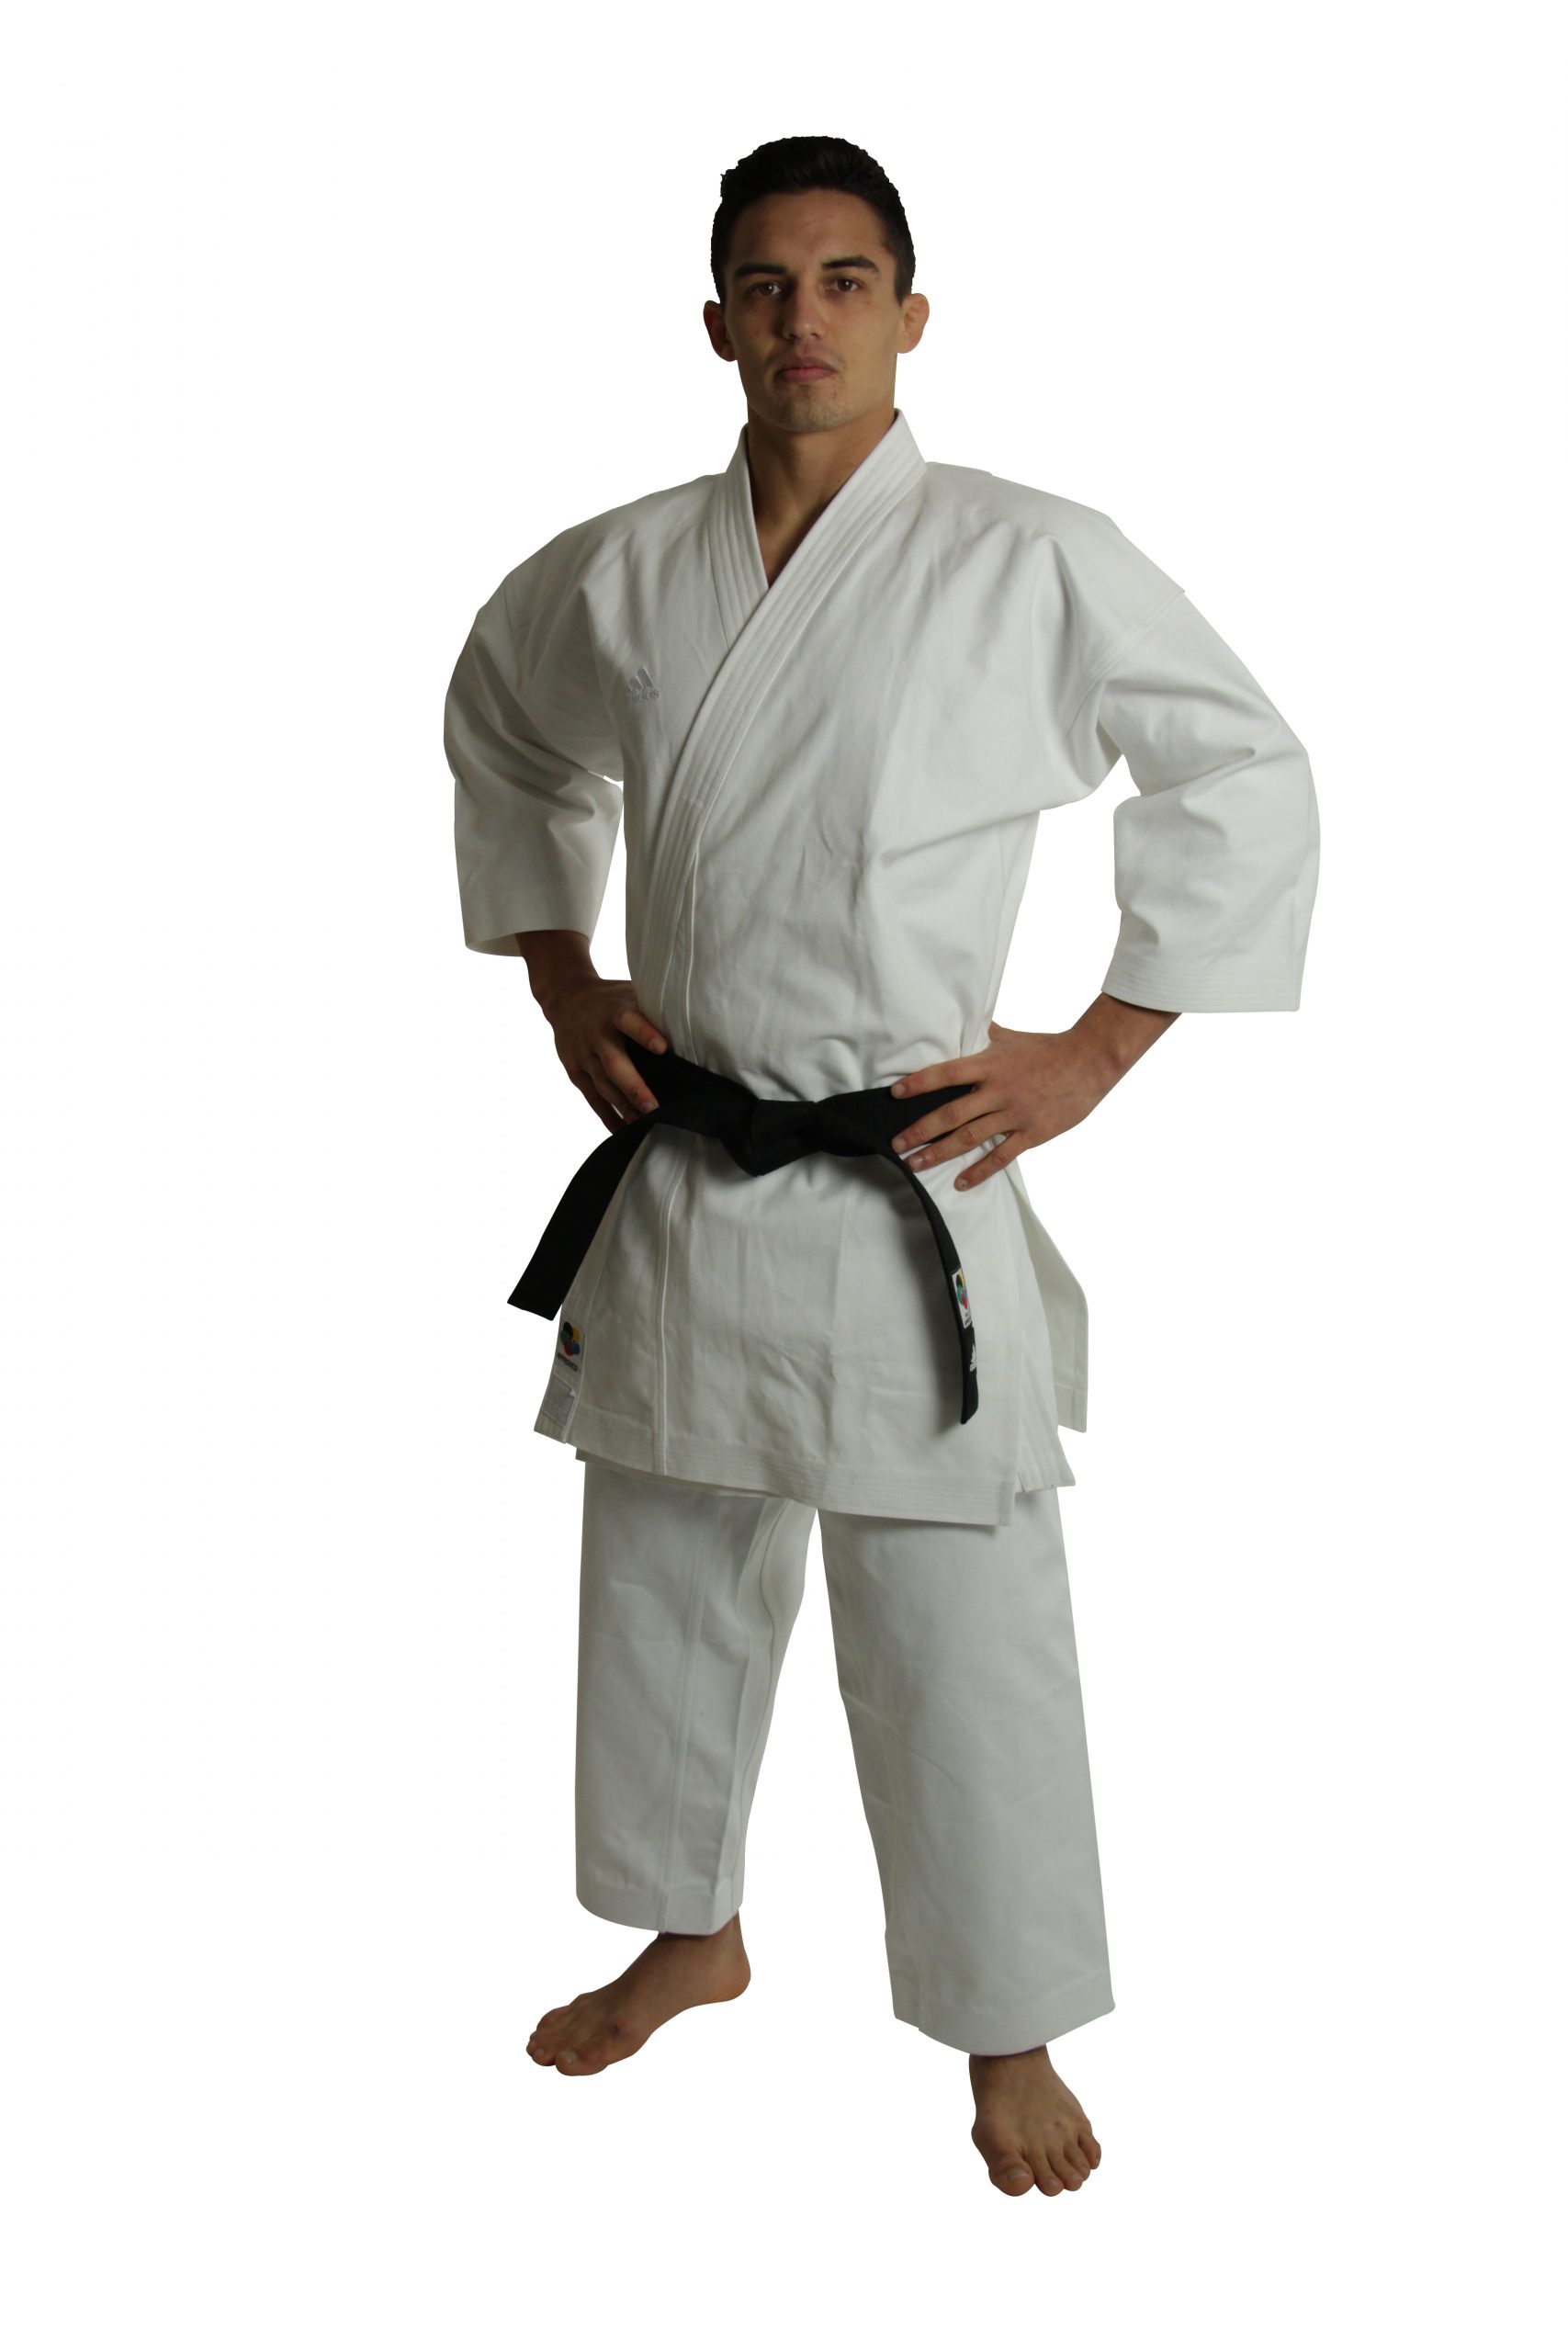 Karategi Adidas KIGAI JAPANESE - Indumentaria para artes